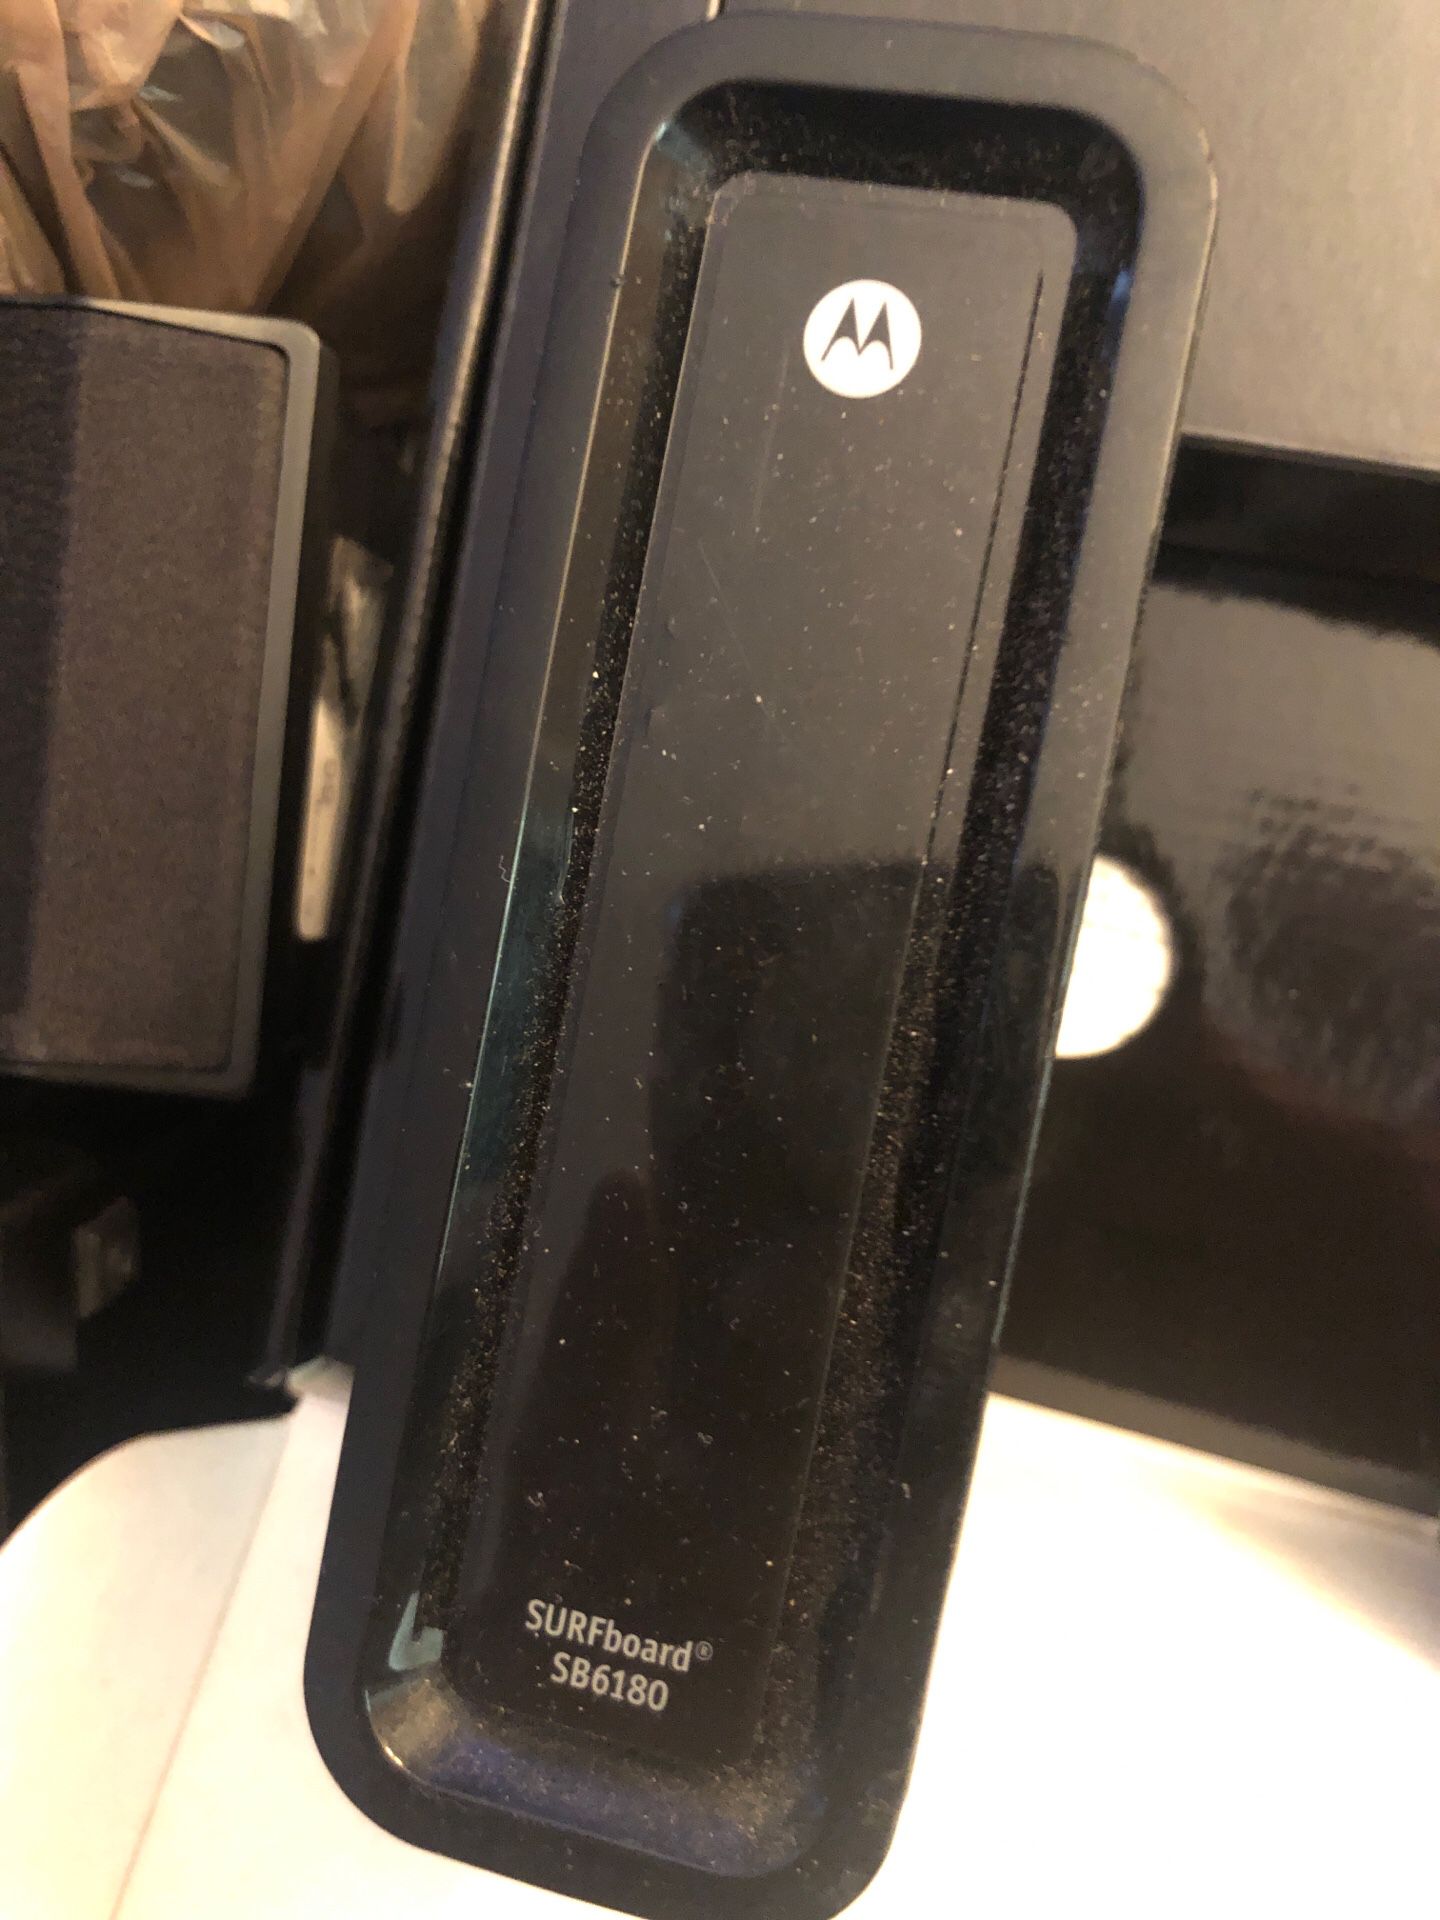 Motorola surfboard modem